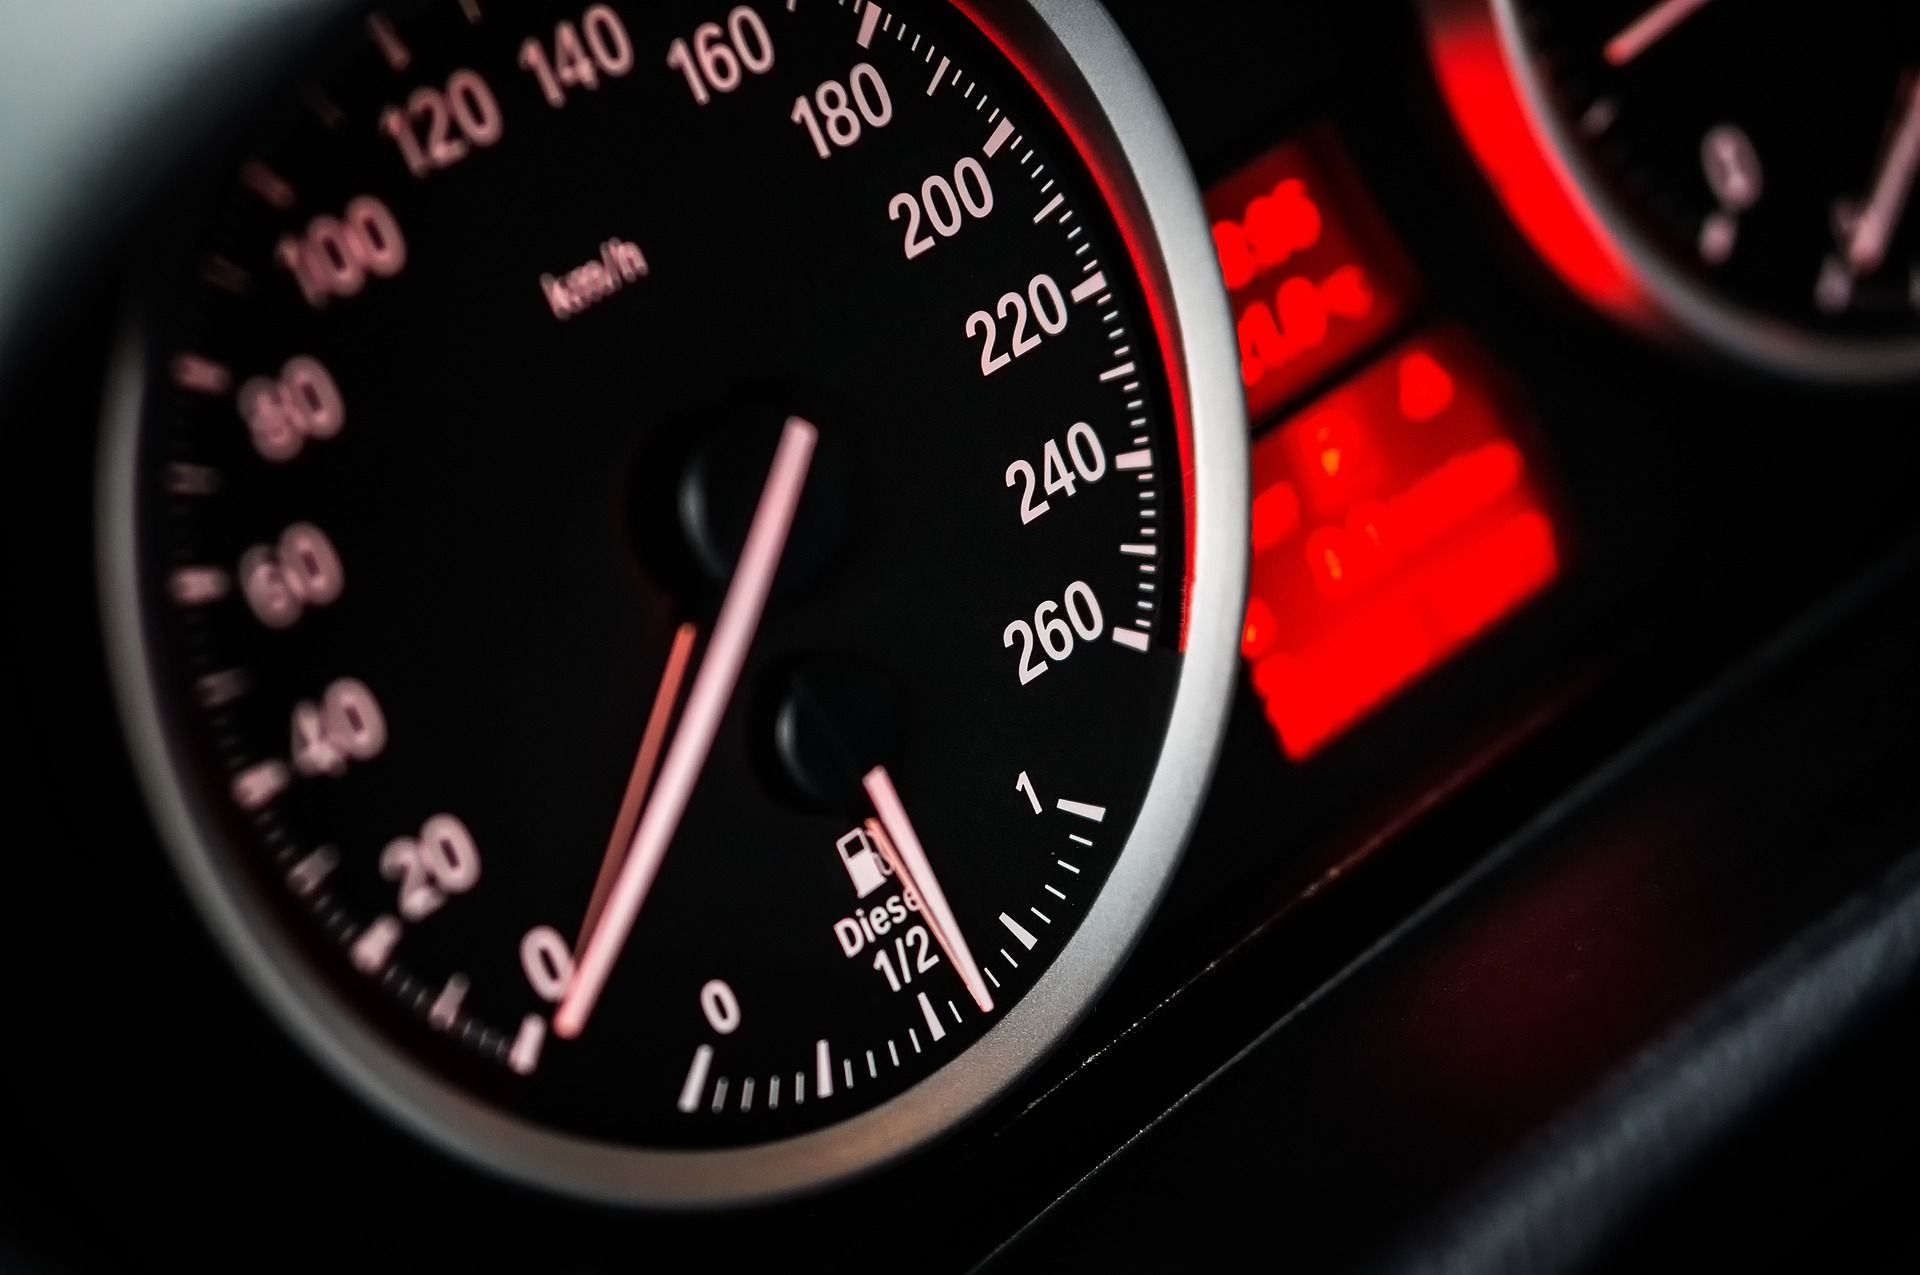 A digital speedometer in kilometers per hour